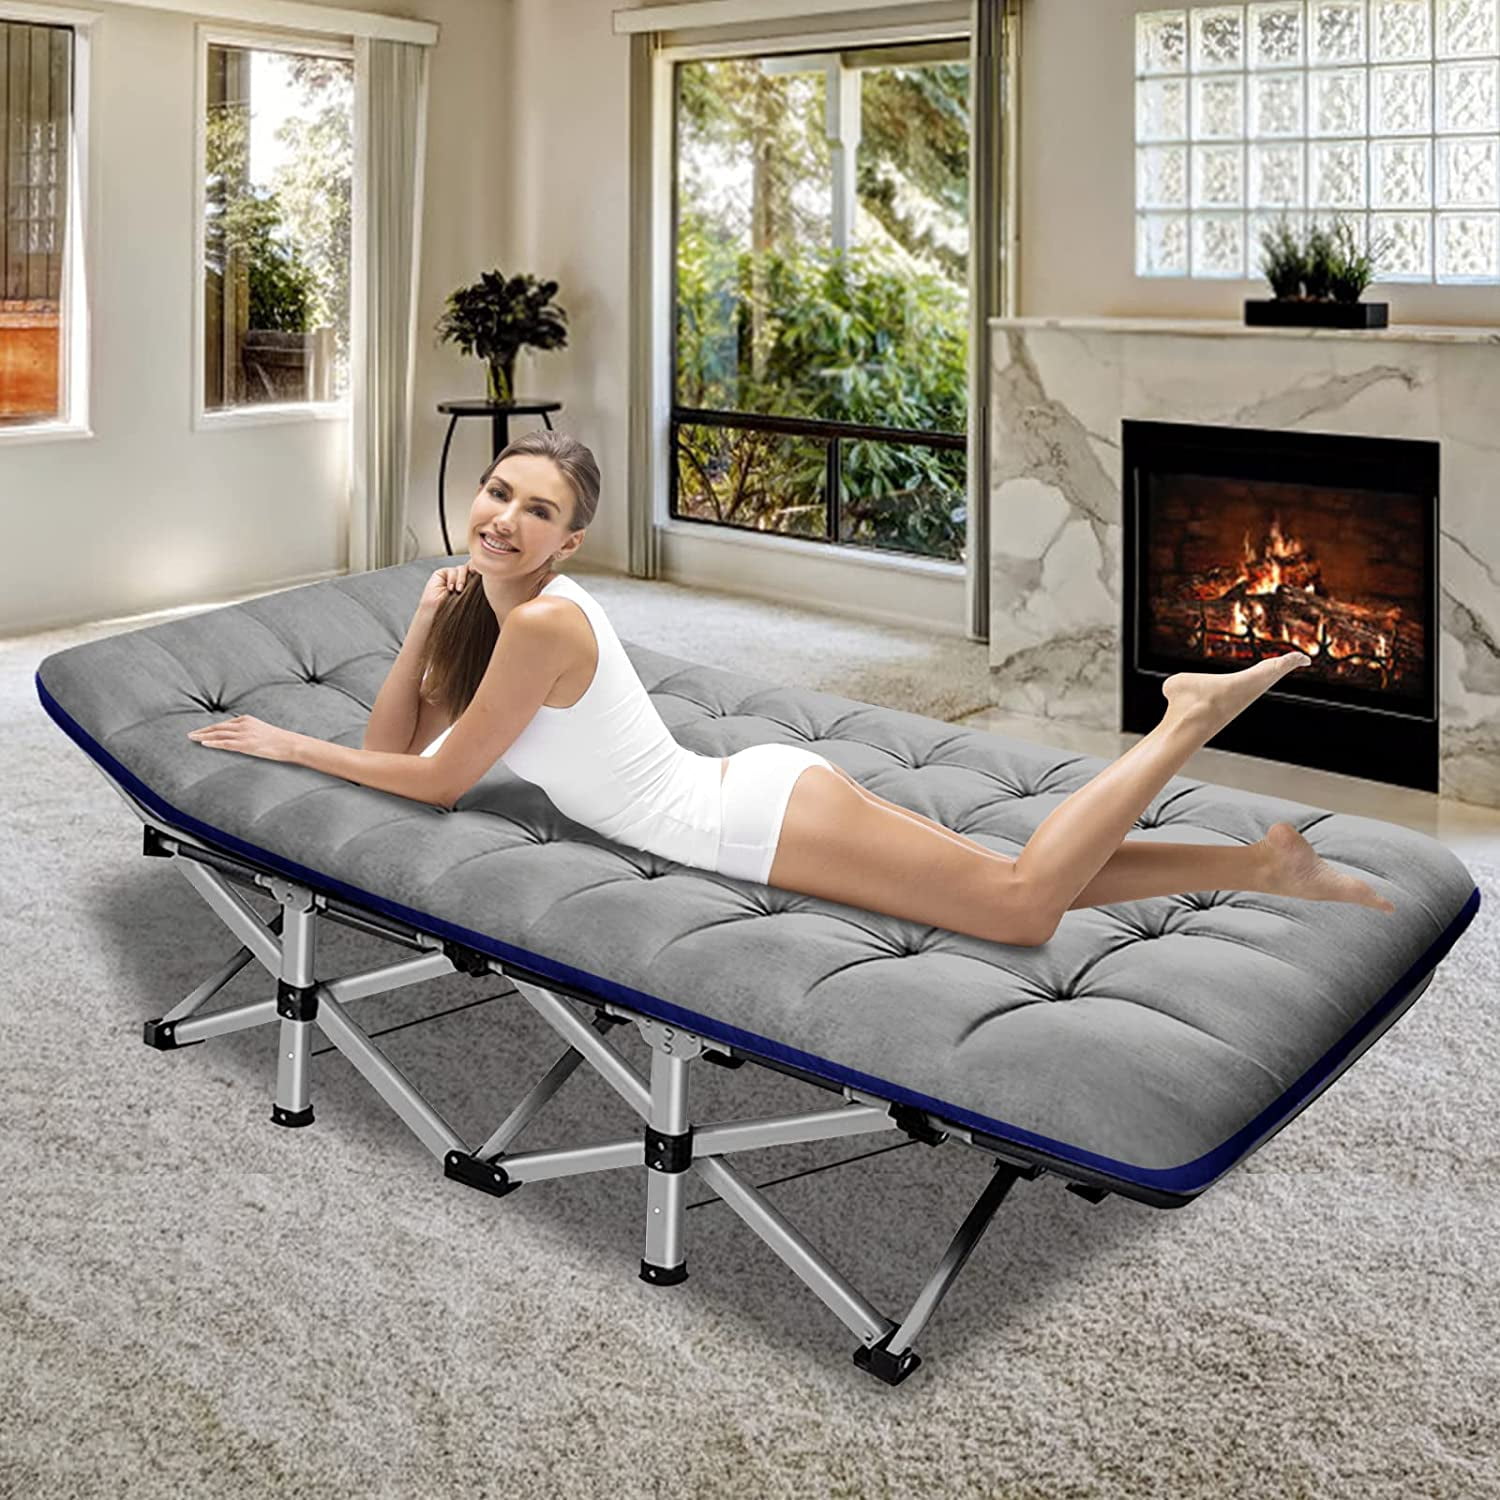 mini travel cot with mattress